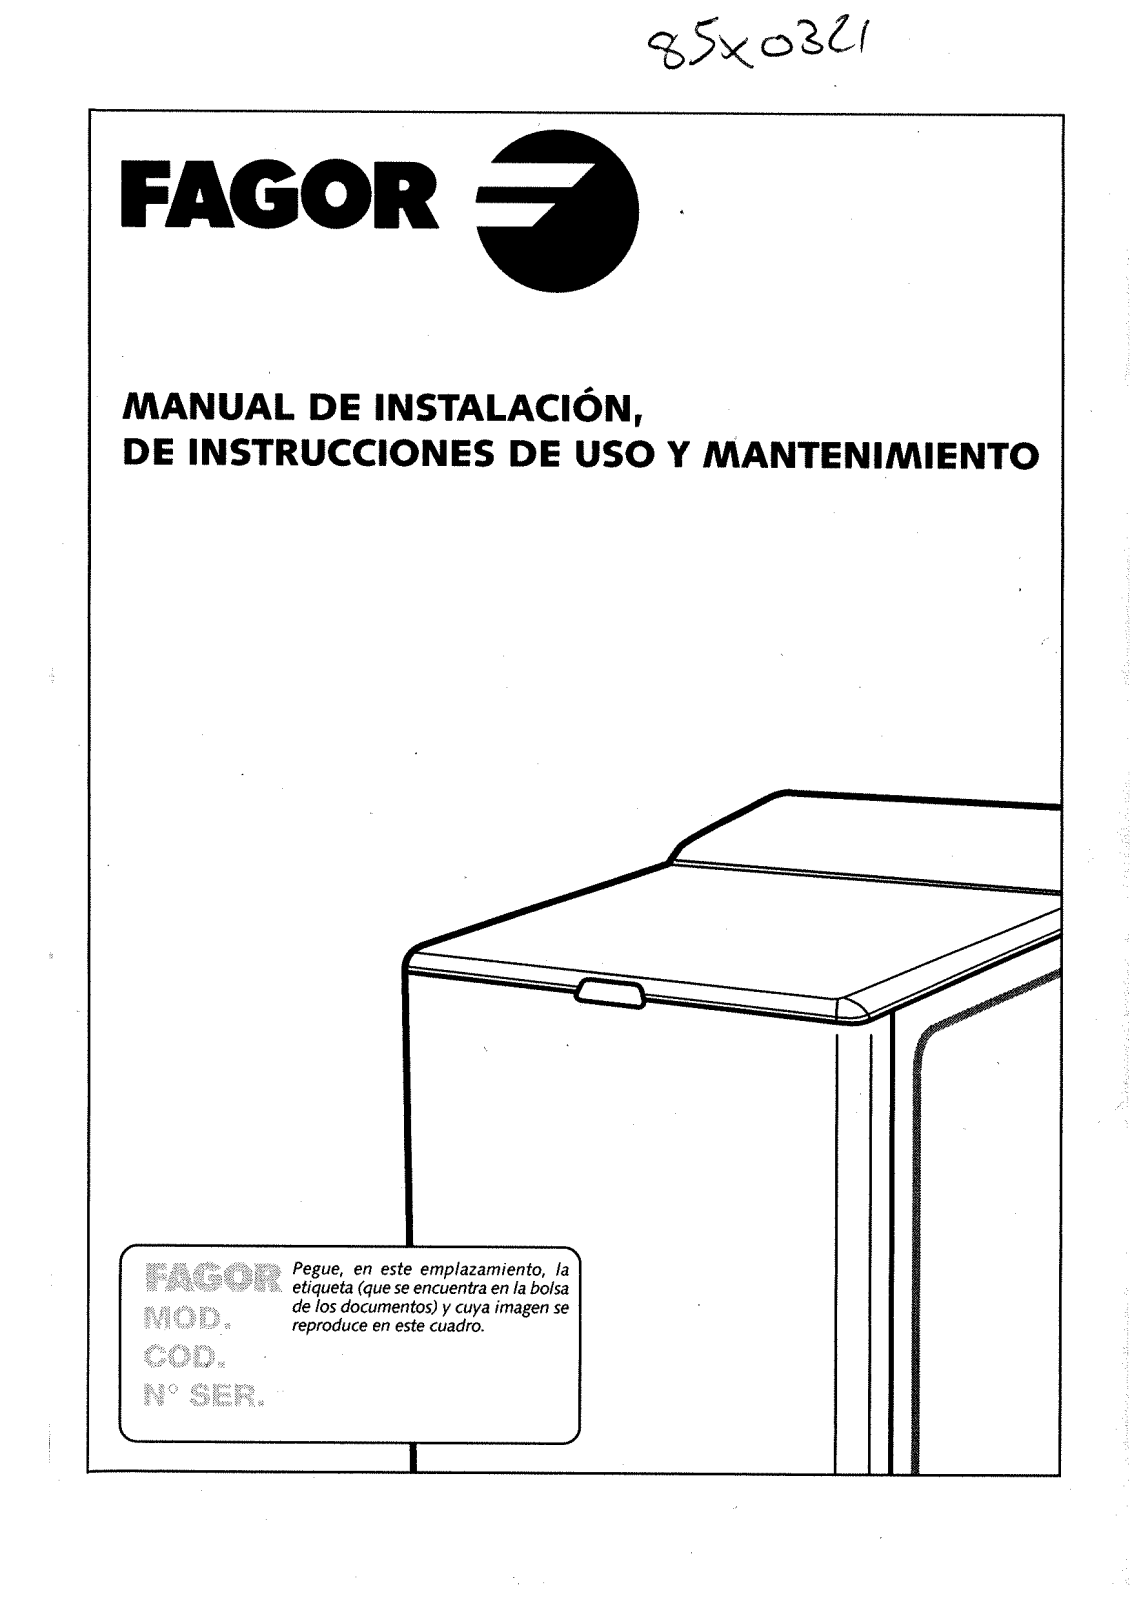 FAGOR FT-309, FT-311 User Manual